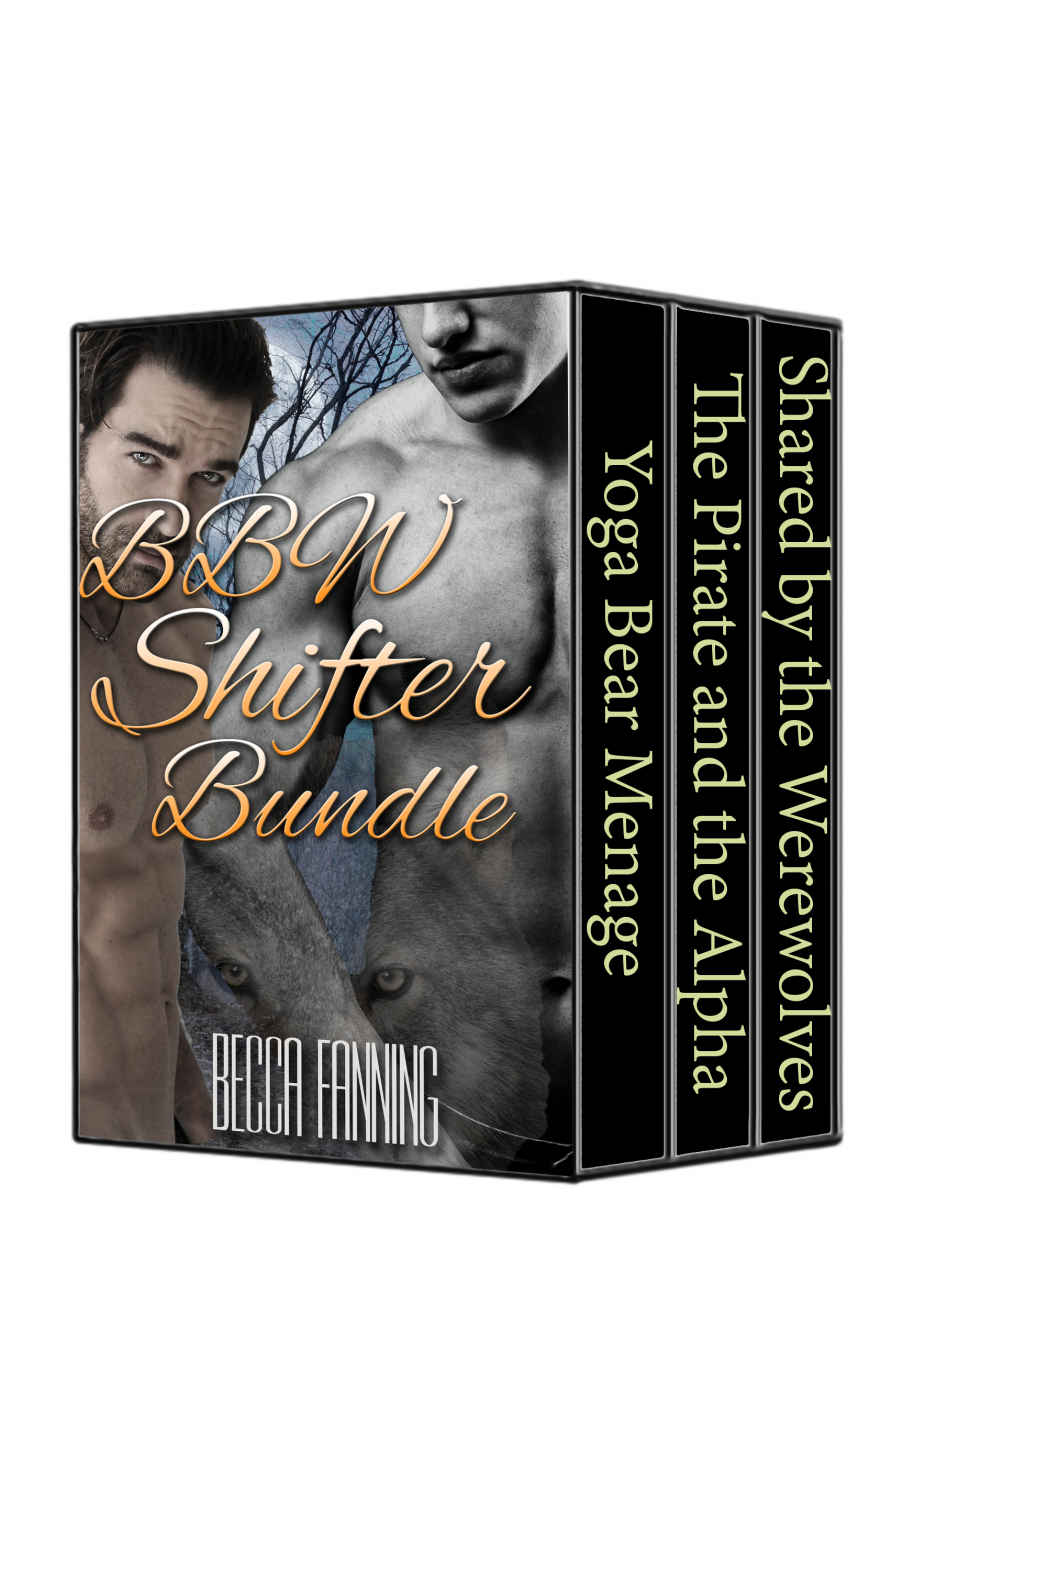 BBW Shifter Bundle (BBW Paranormal Shifter Romance) by Becca Fanning